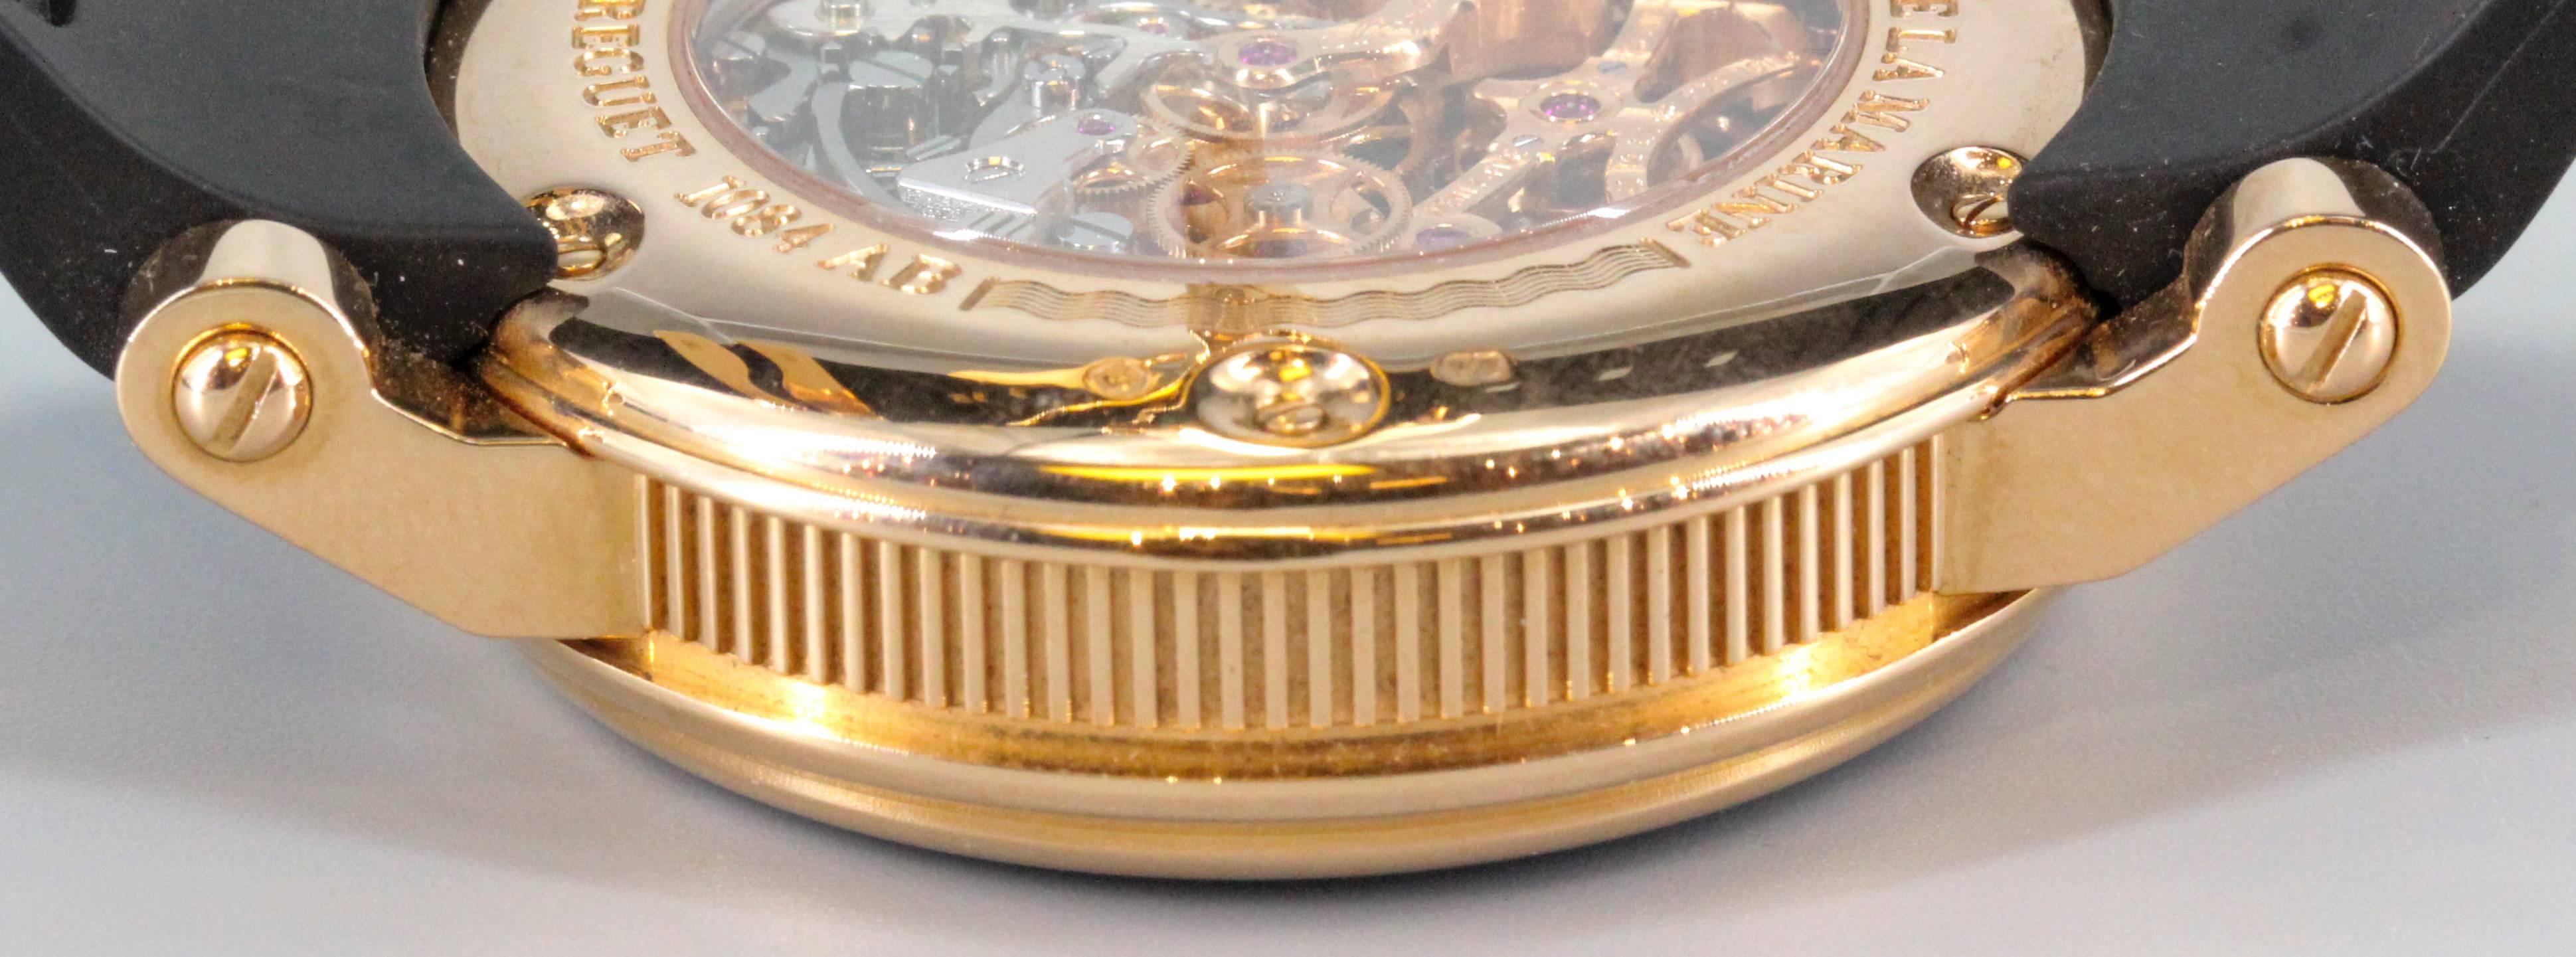 breguet marine chronograph rose gold